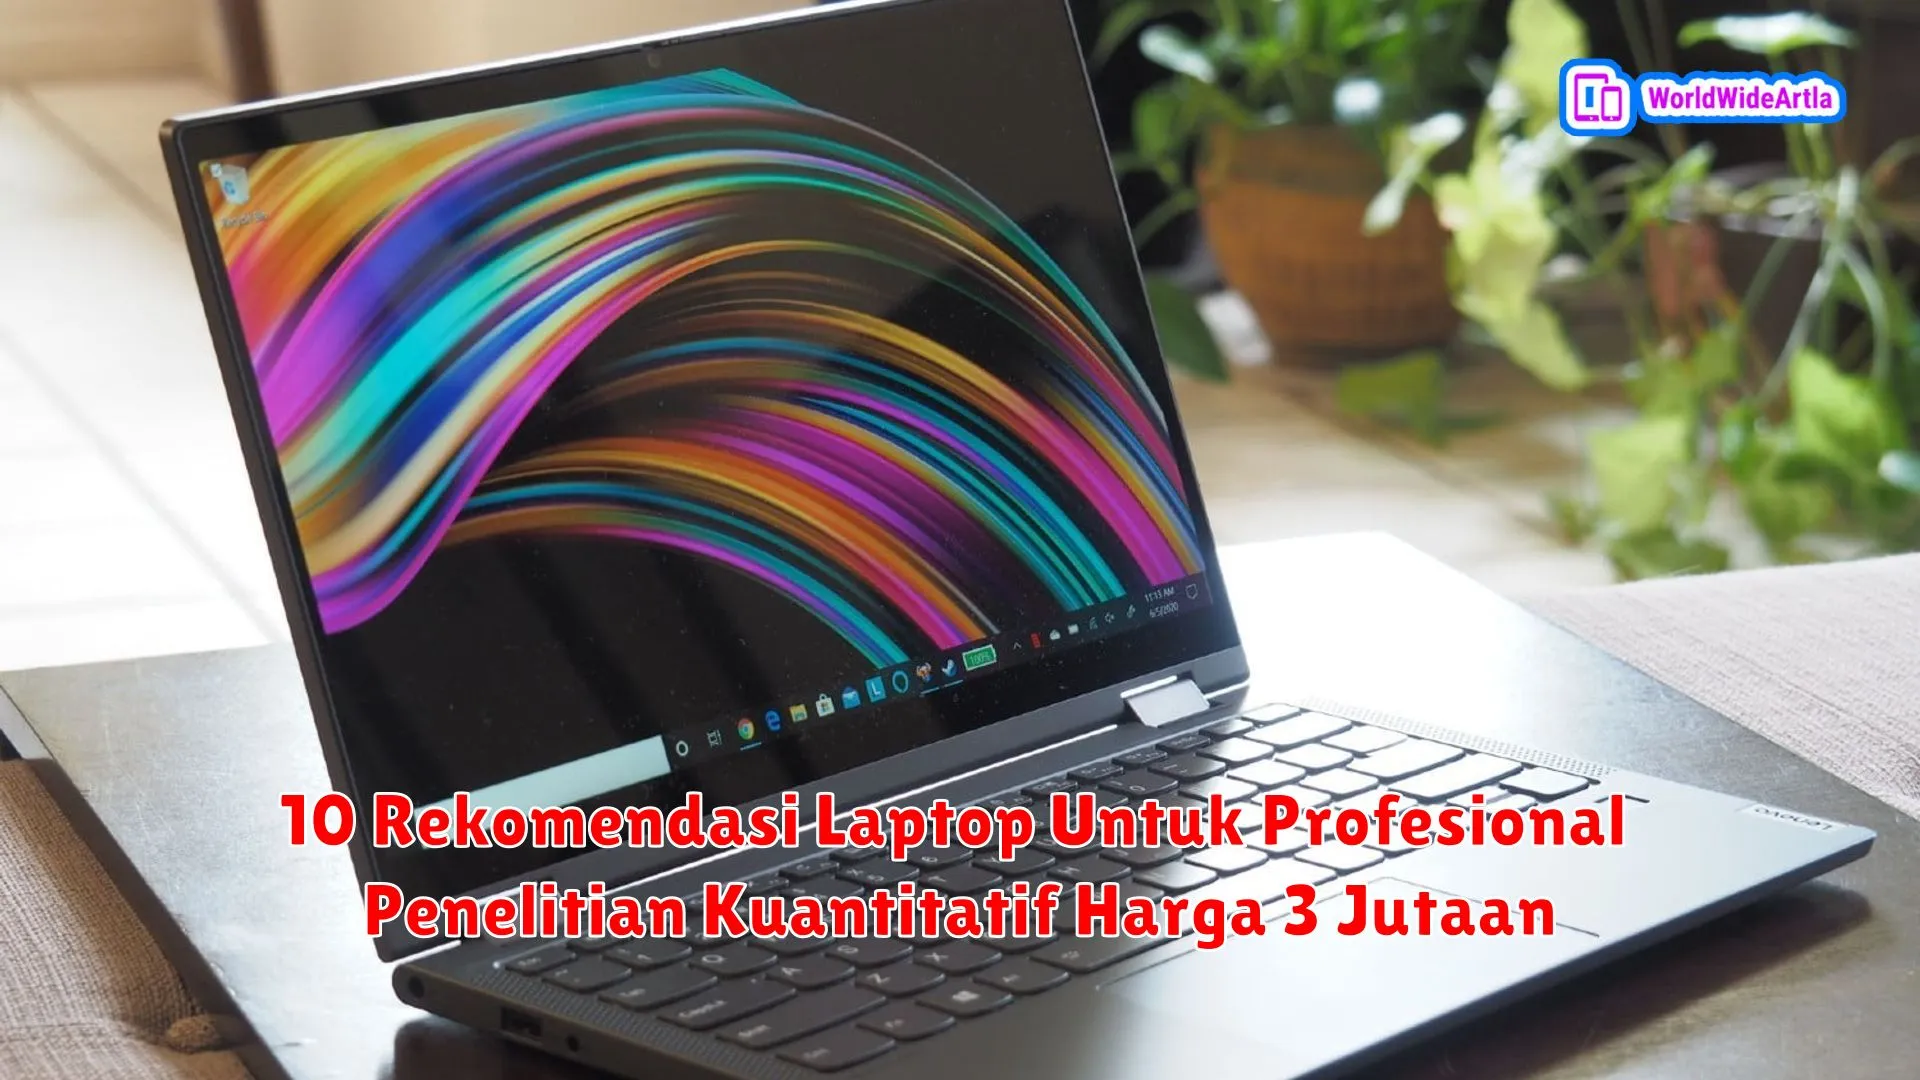 10 Rekomendasi Laptop Untuk Profesional Penelitian Kuantitatif Harga 3 Jutaan